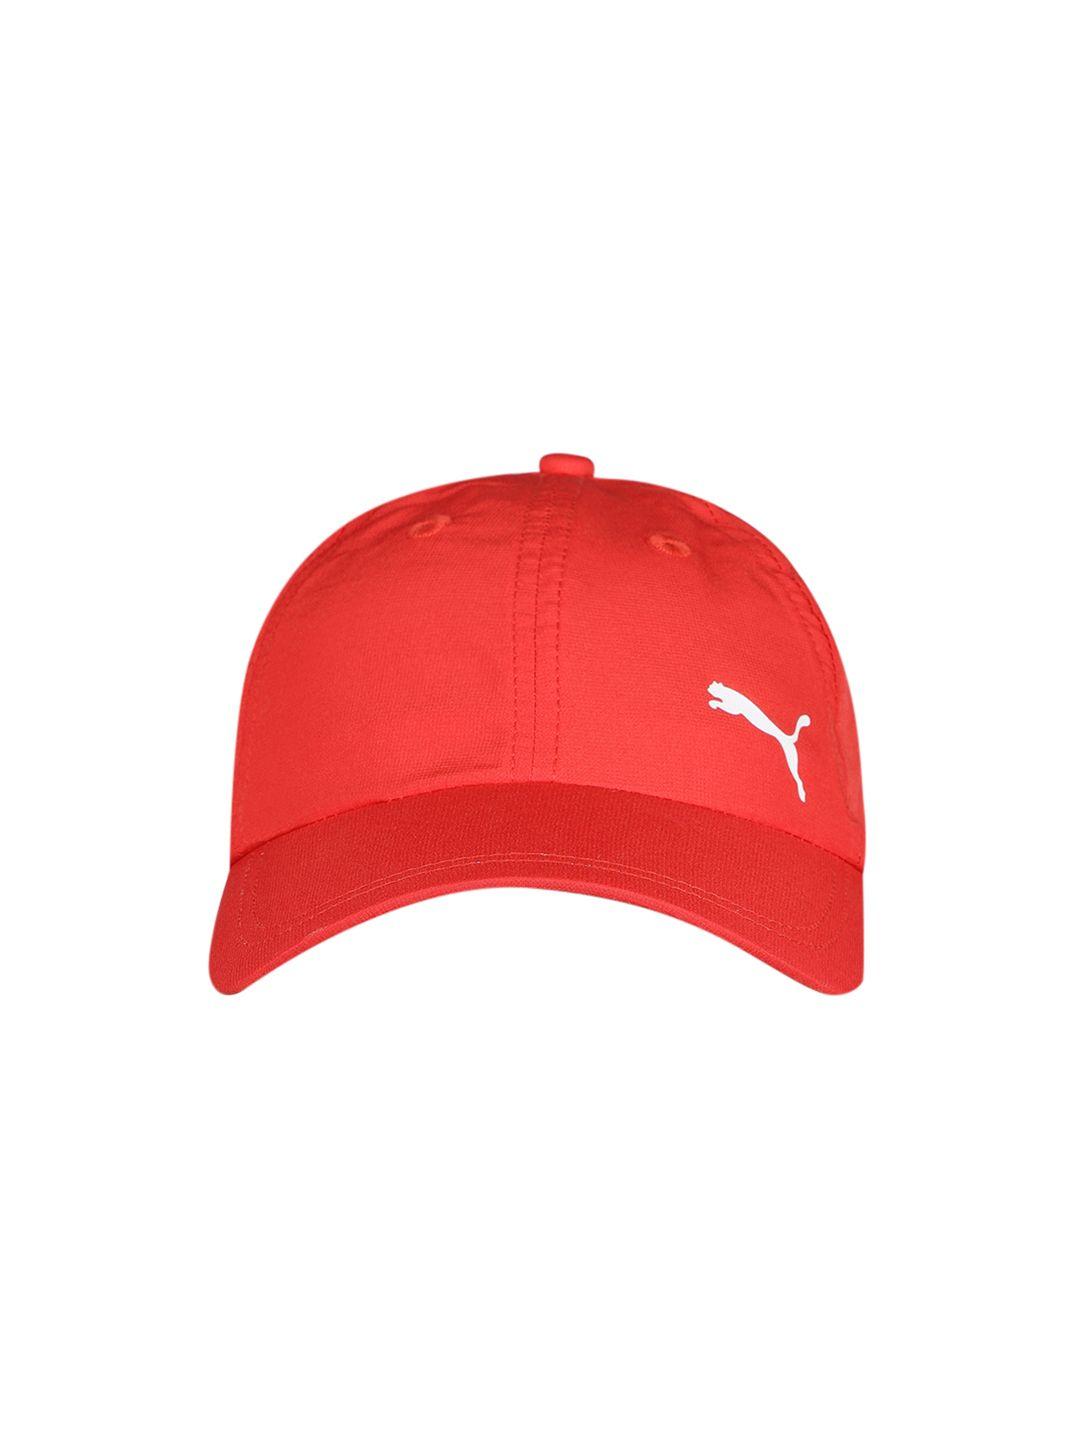 puma unisex red tr core baseball cap